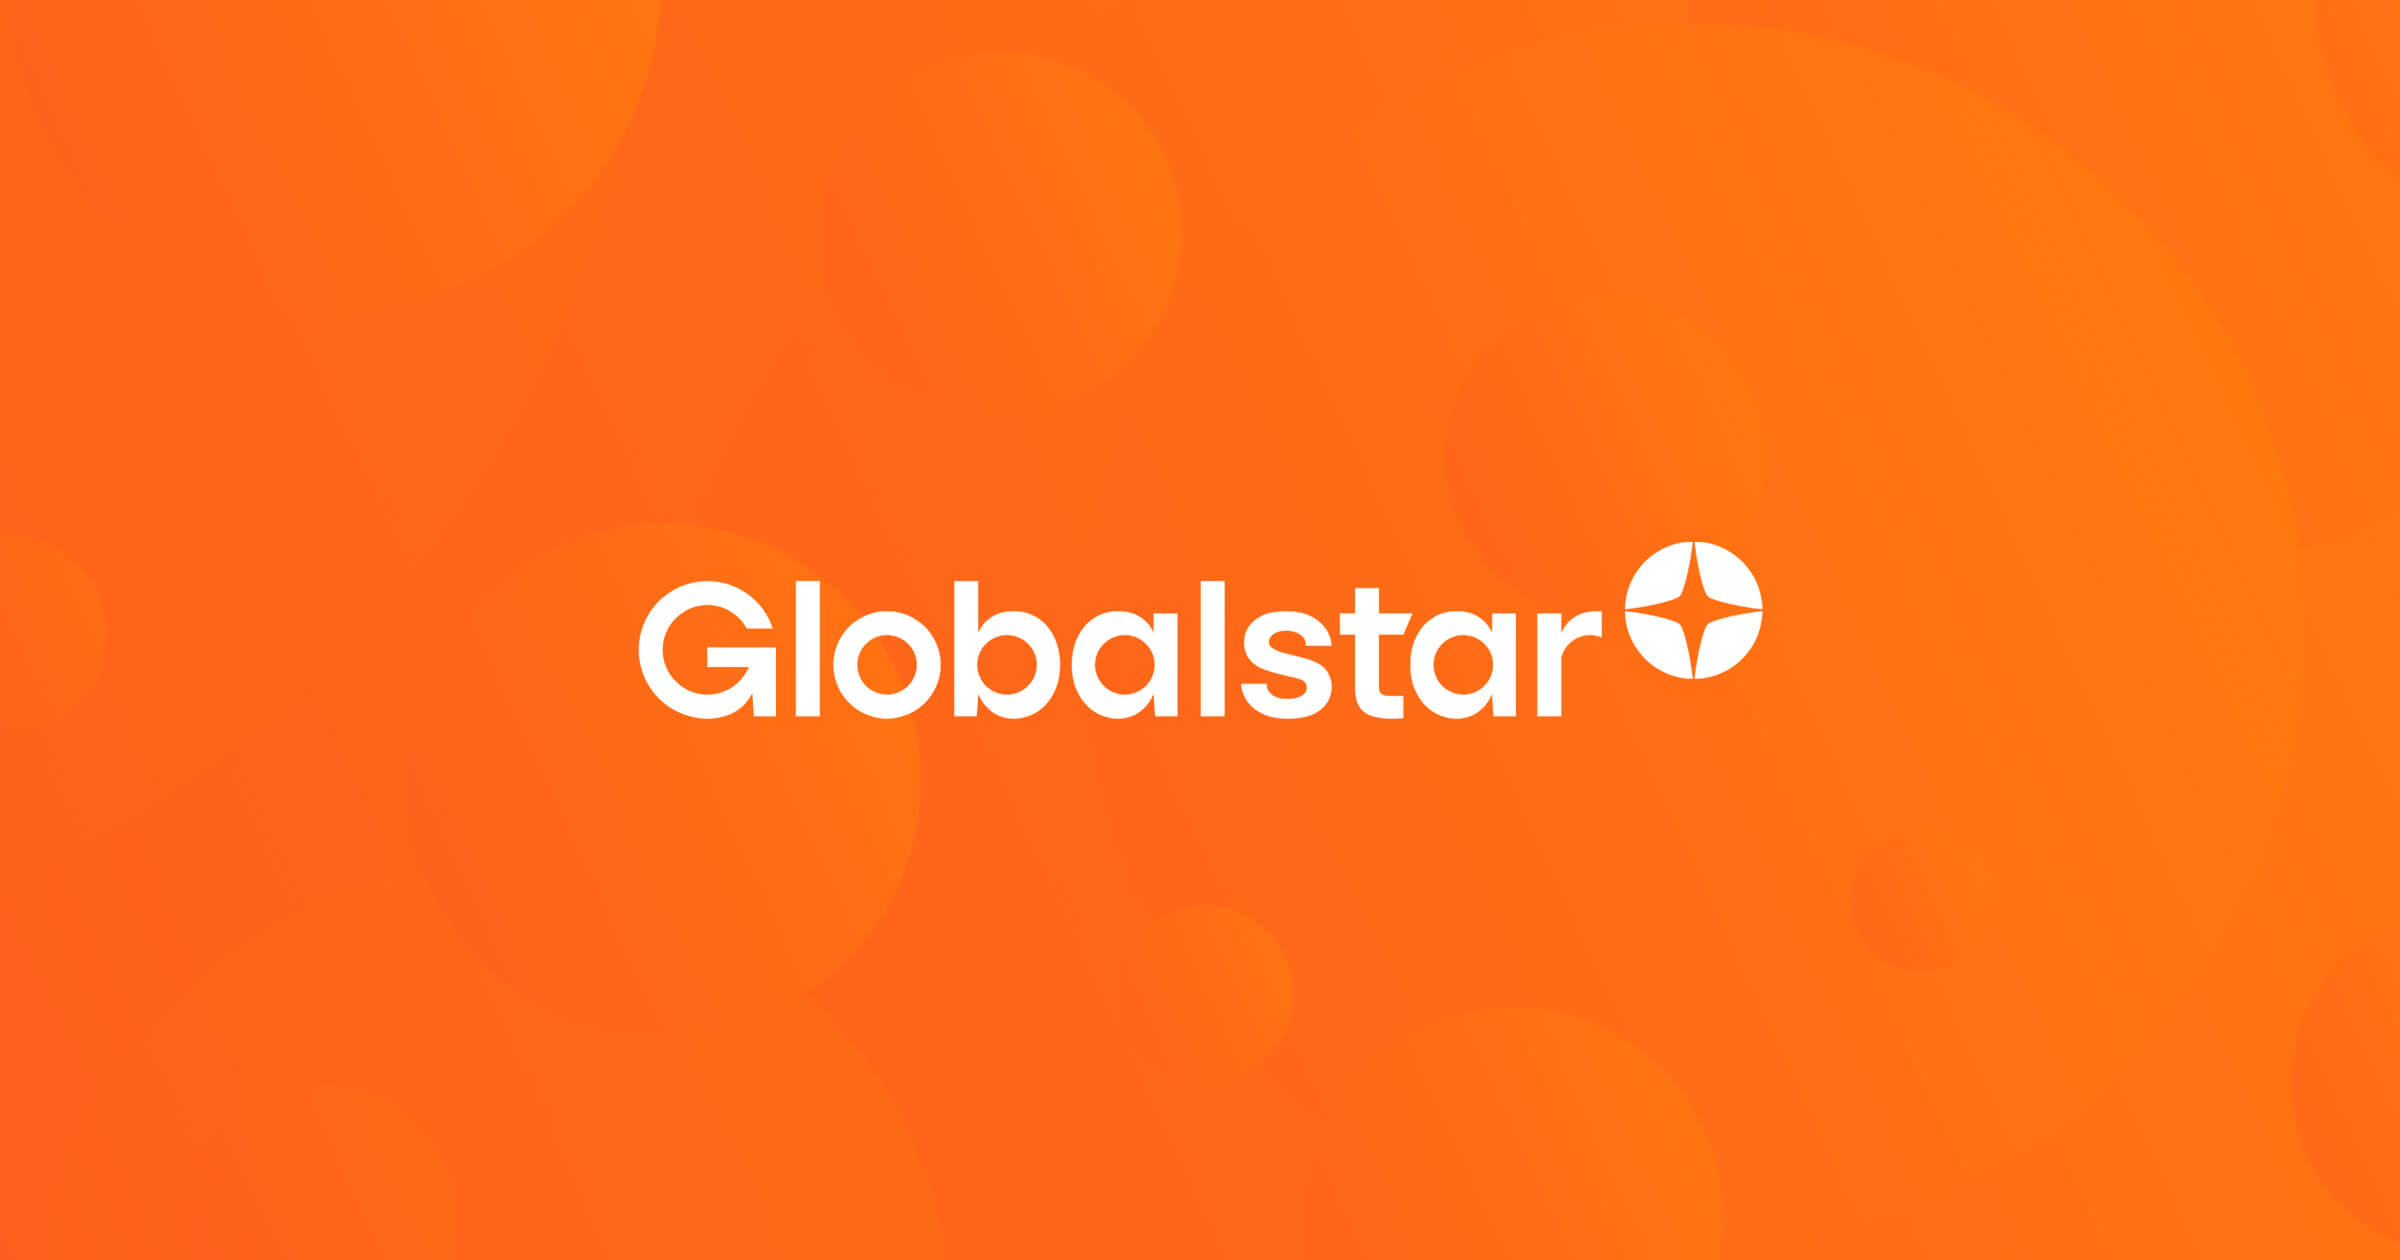 Globalstar, Inc.